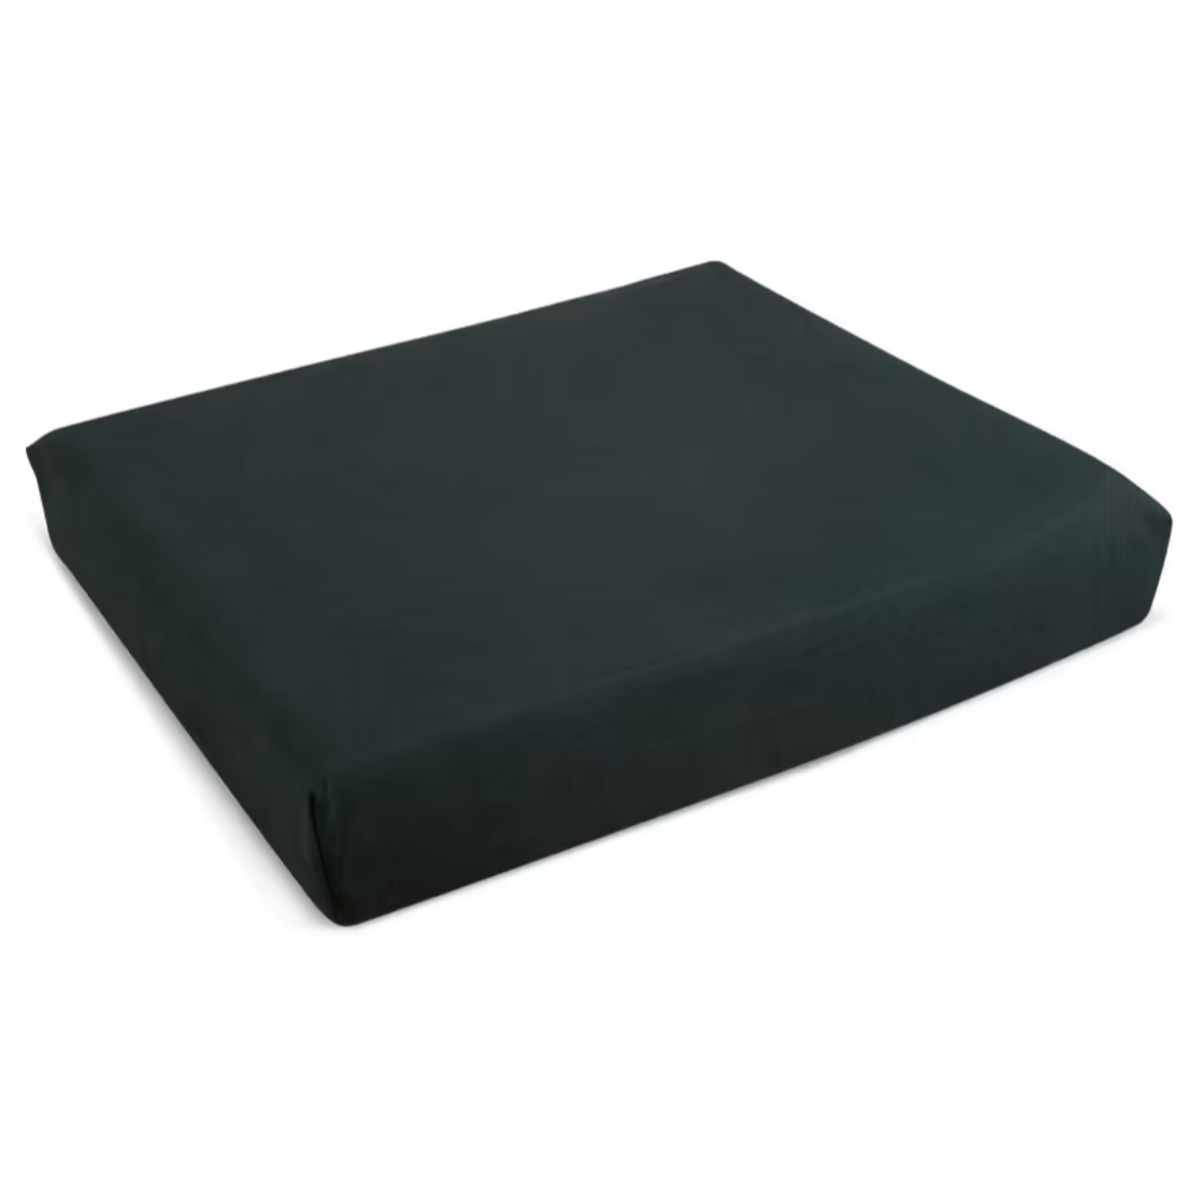 Medi-Soft memory foam cushion with fabric cover